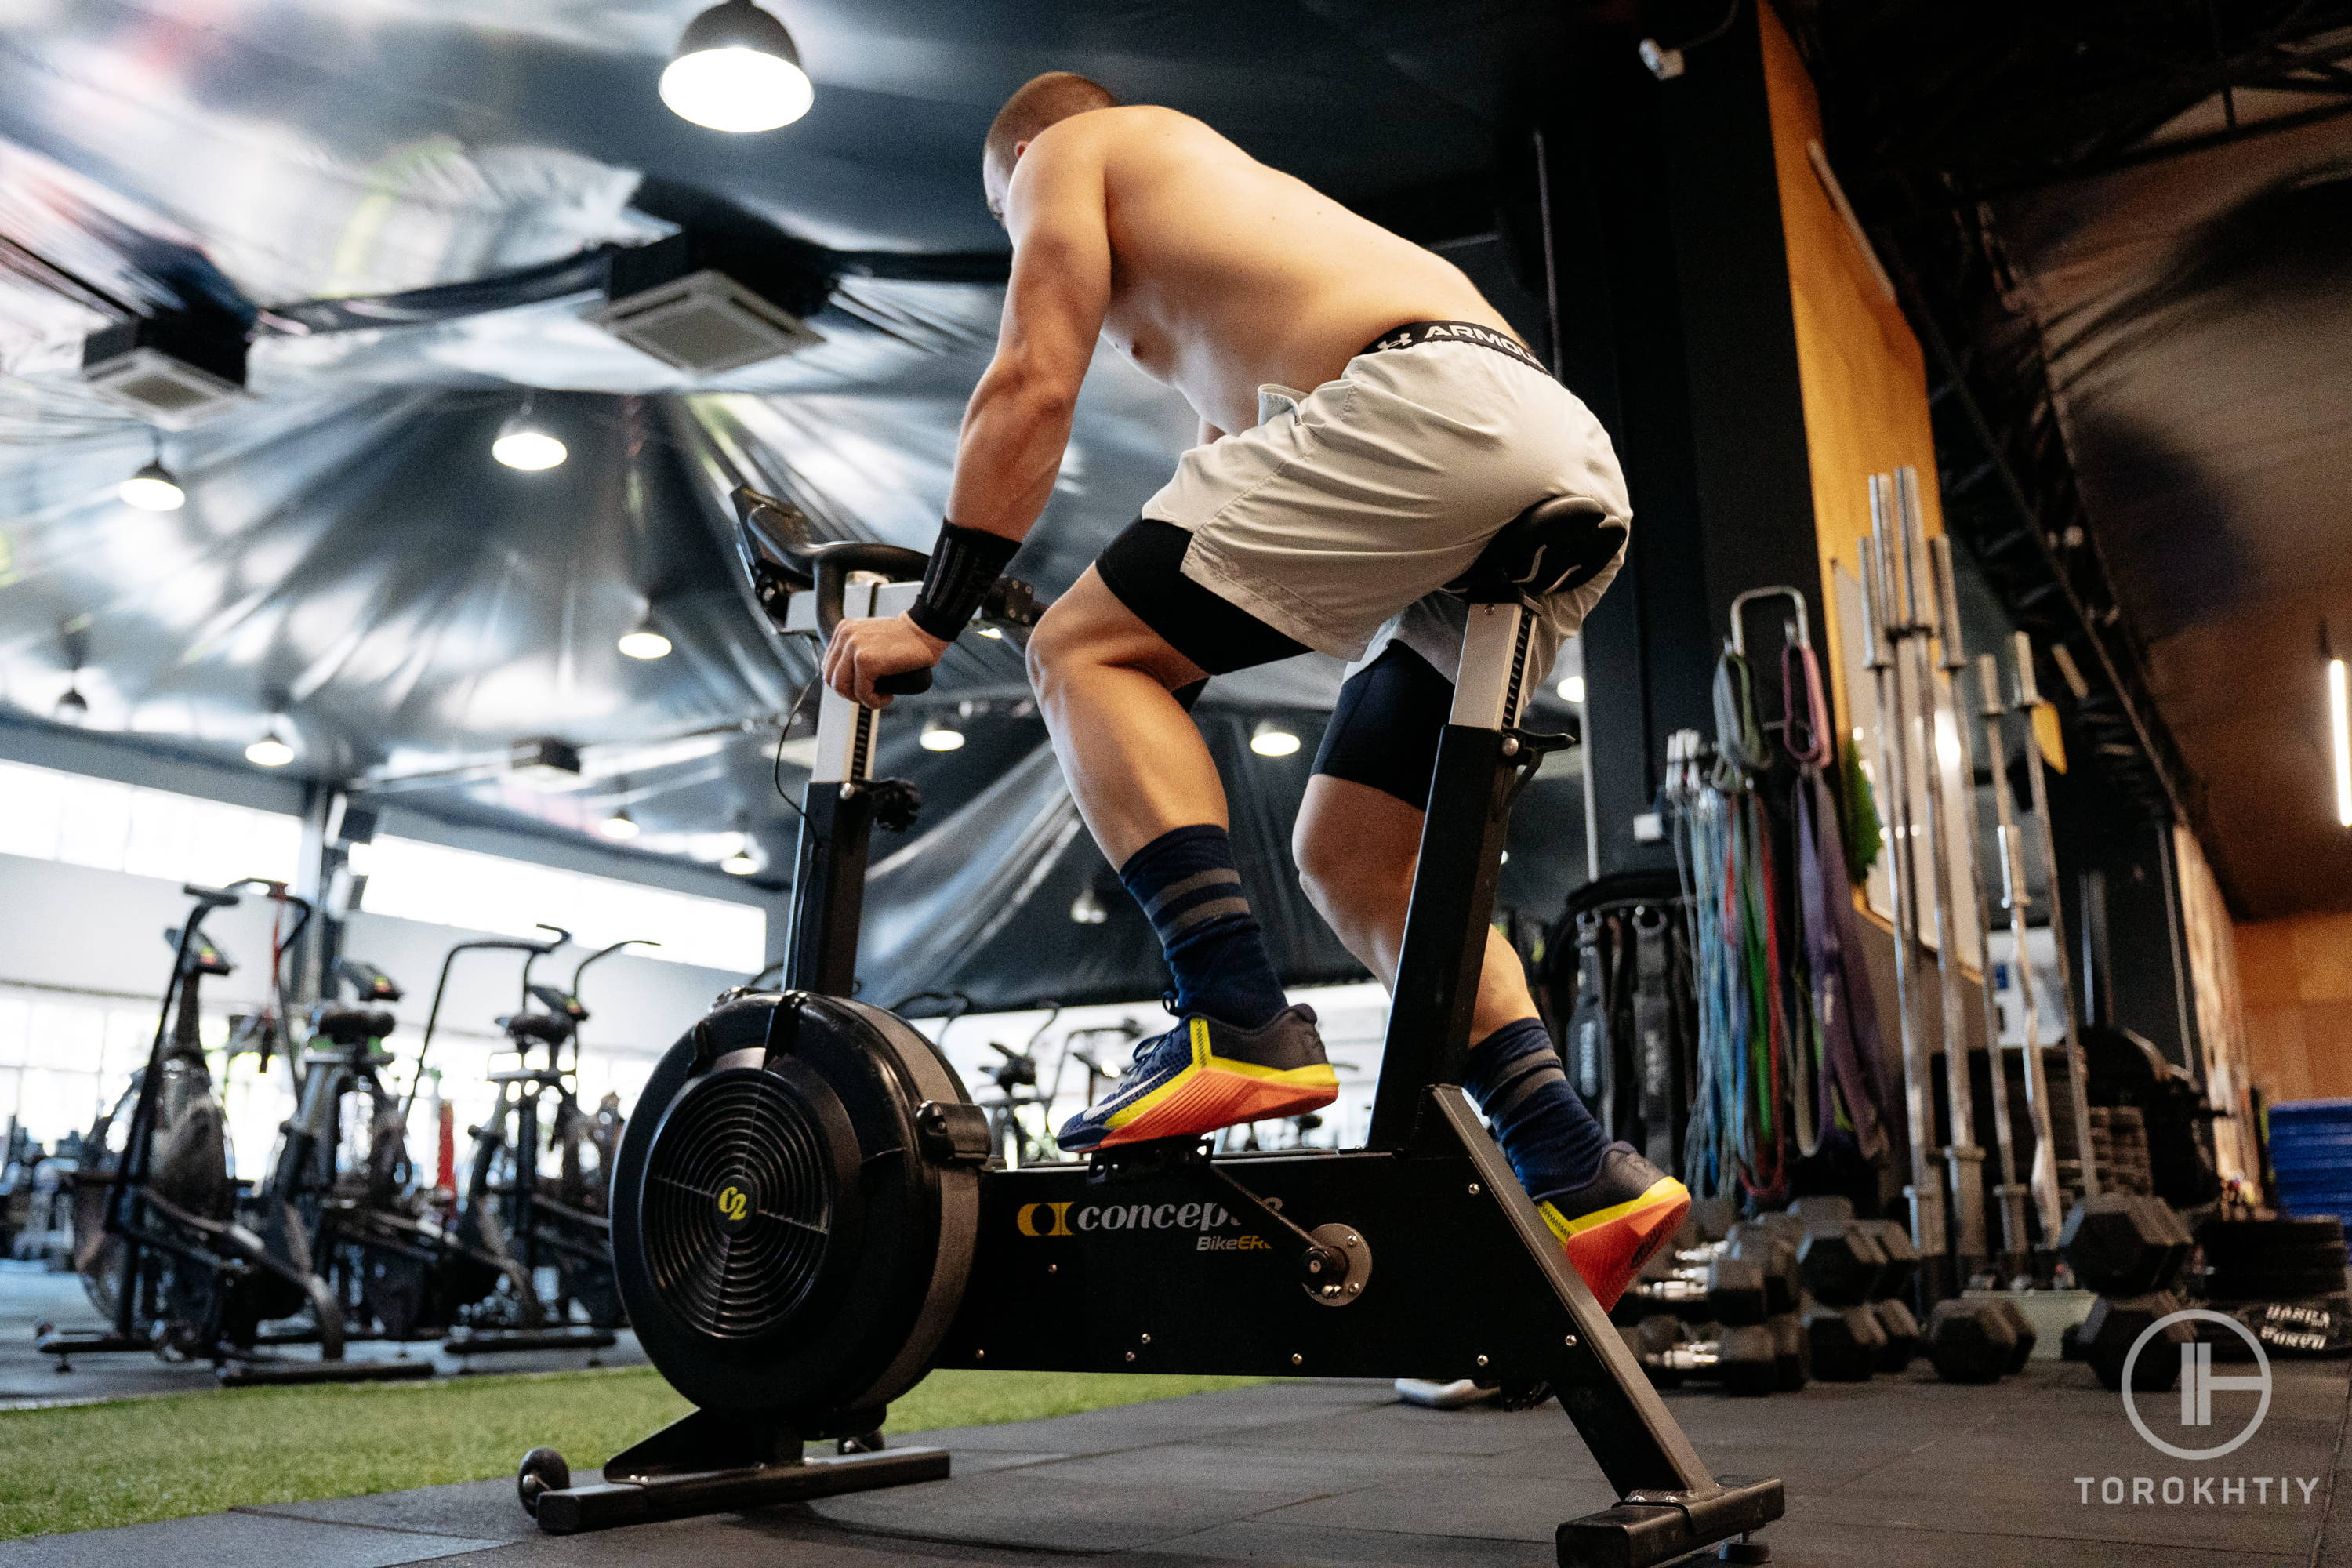 athlete in white shorts training on exercise bike in gym